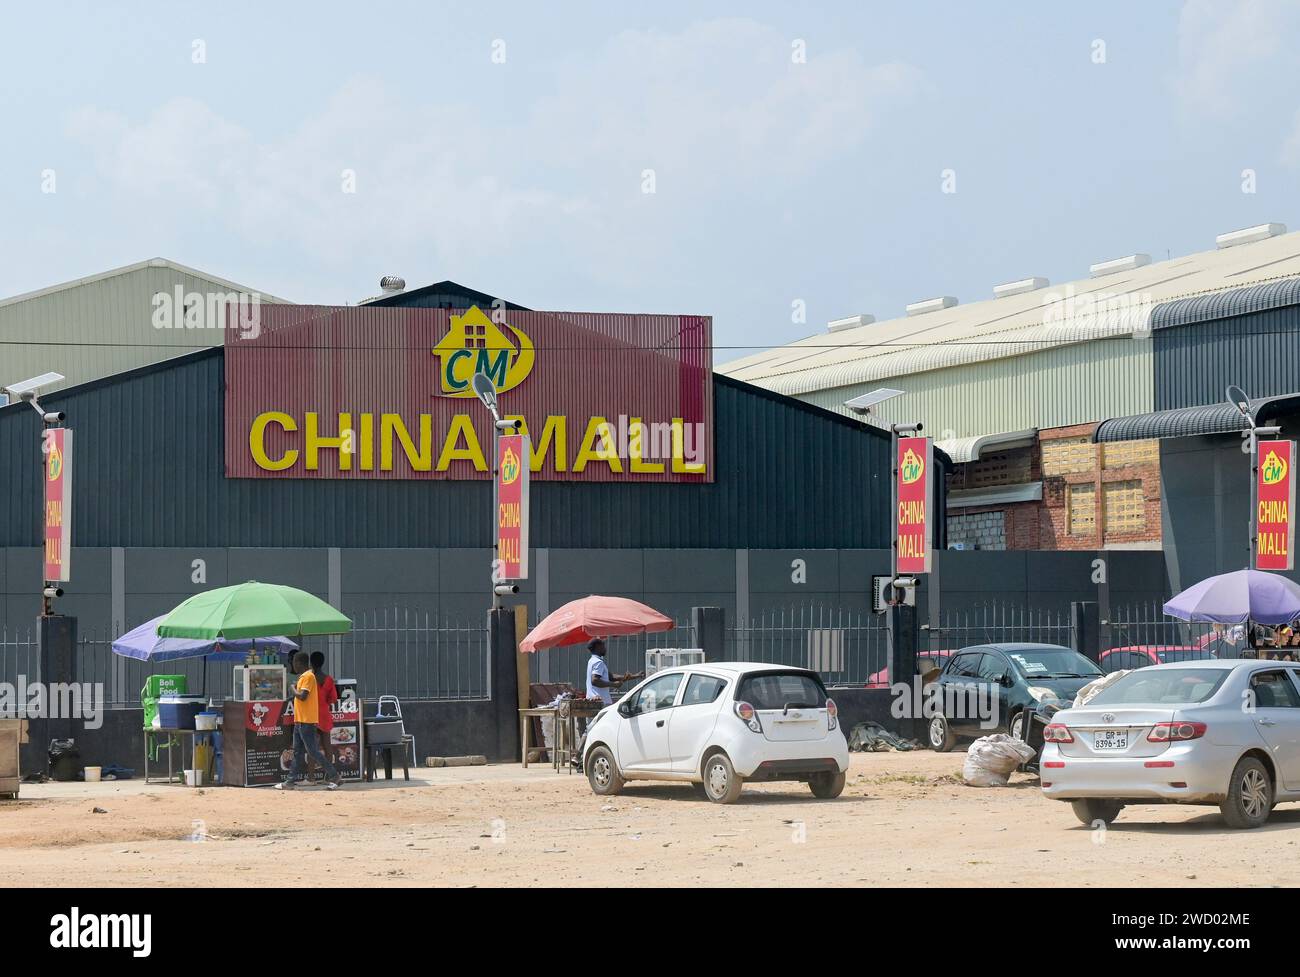 GHANA, centro comercial de propiedad china China Mall en el Accra - Kumasi Road / GHANA, Einkaufszentrum China Mall an der Accra - Kumasi Autobahn Foto de stock